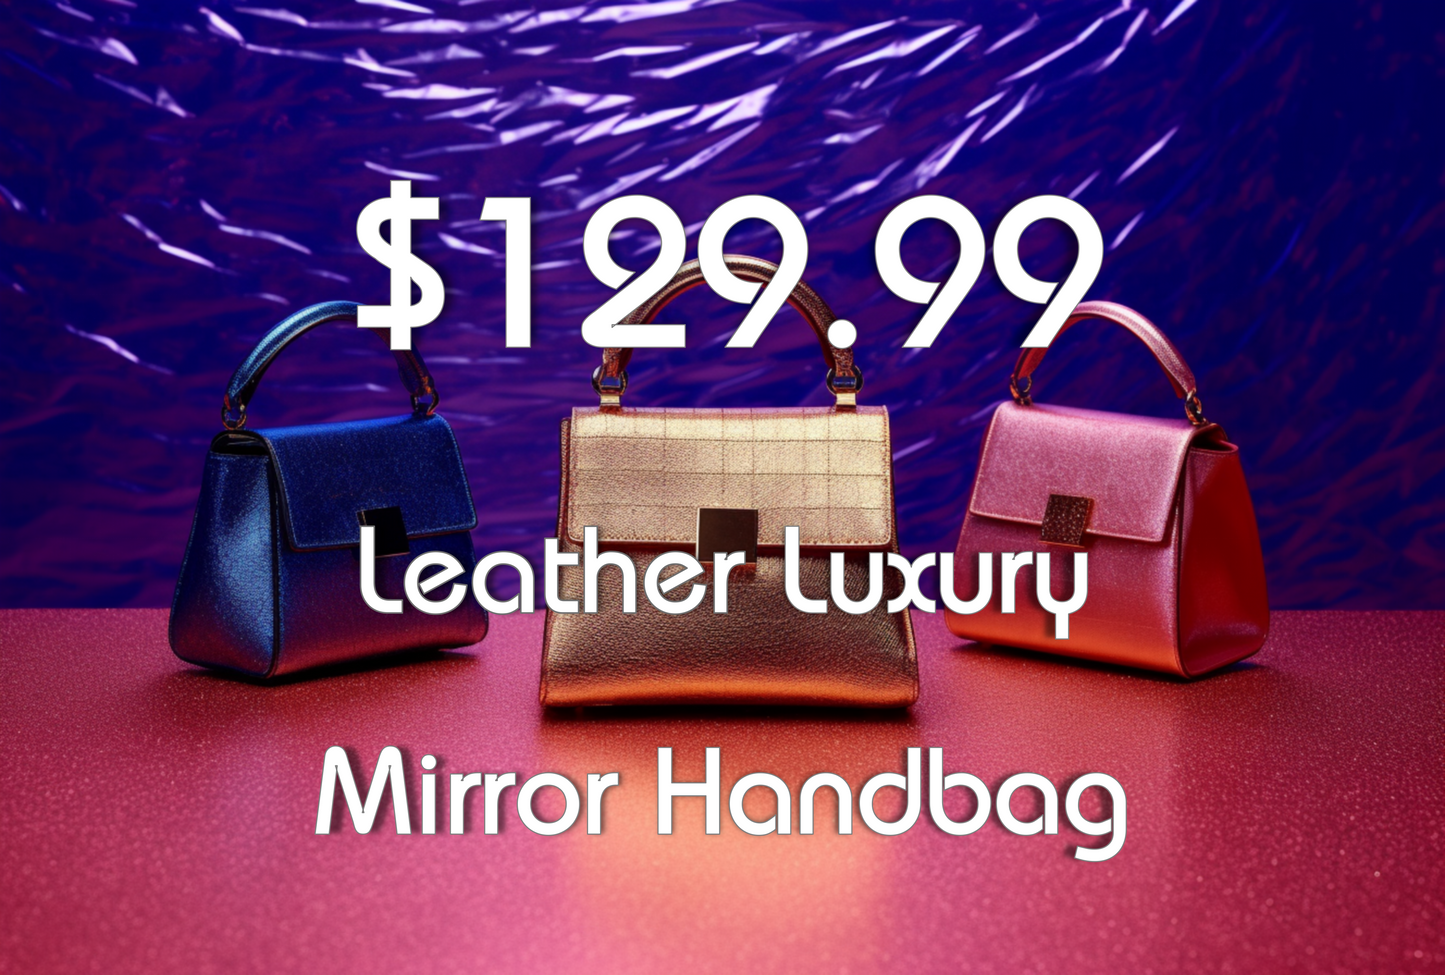 Luna Bags Crazy Sale $129.99